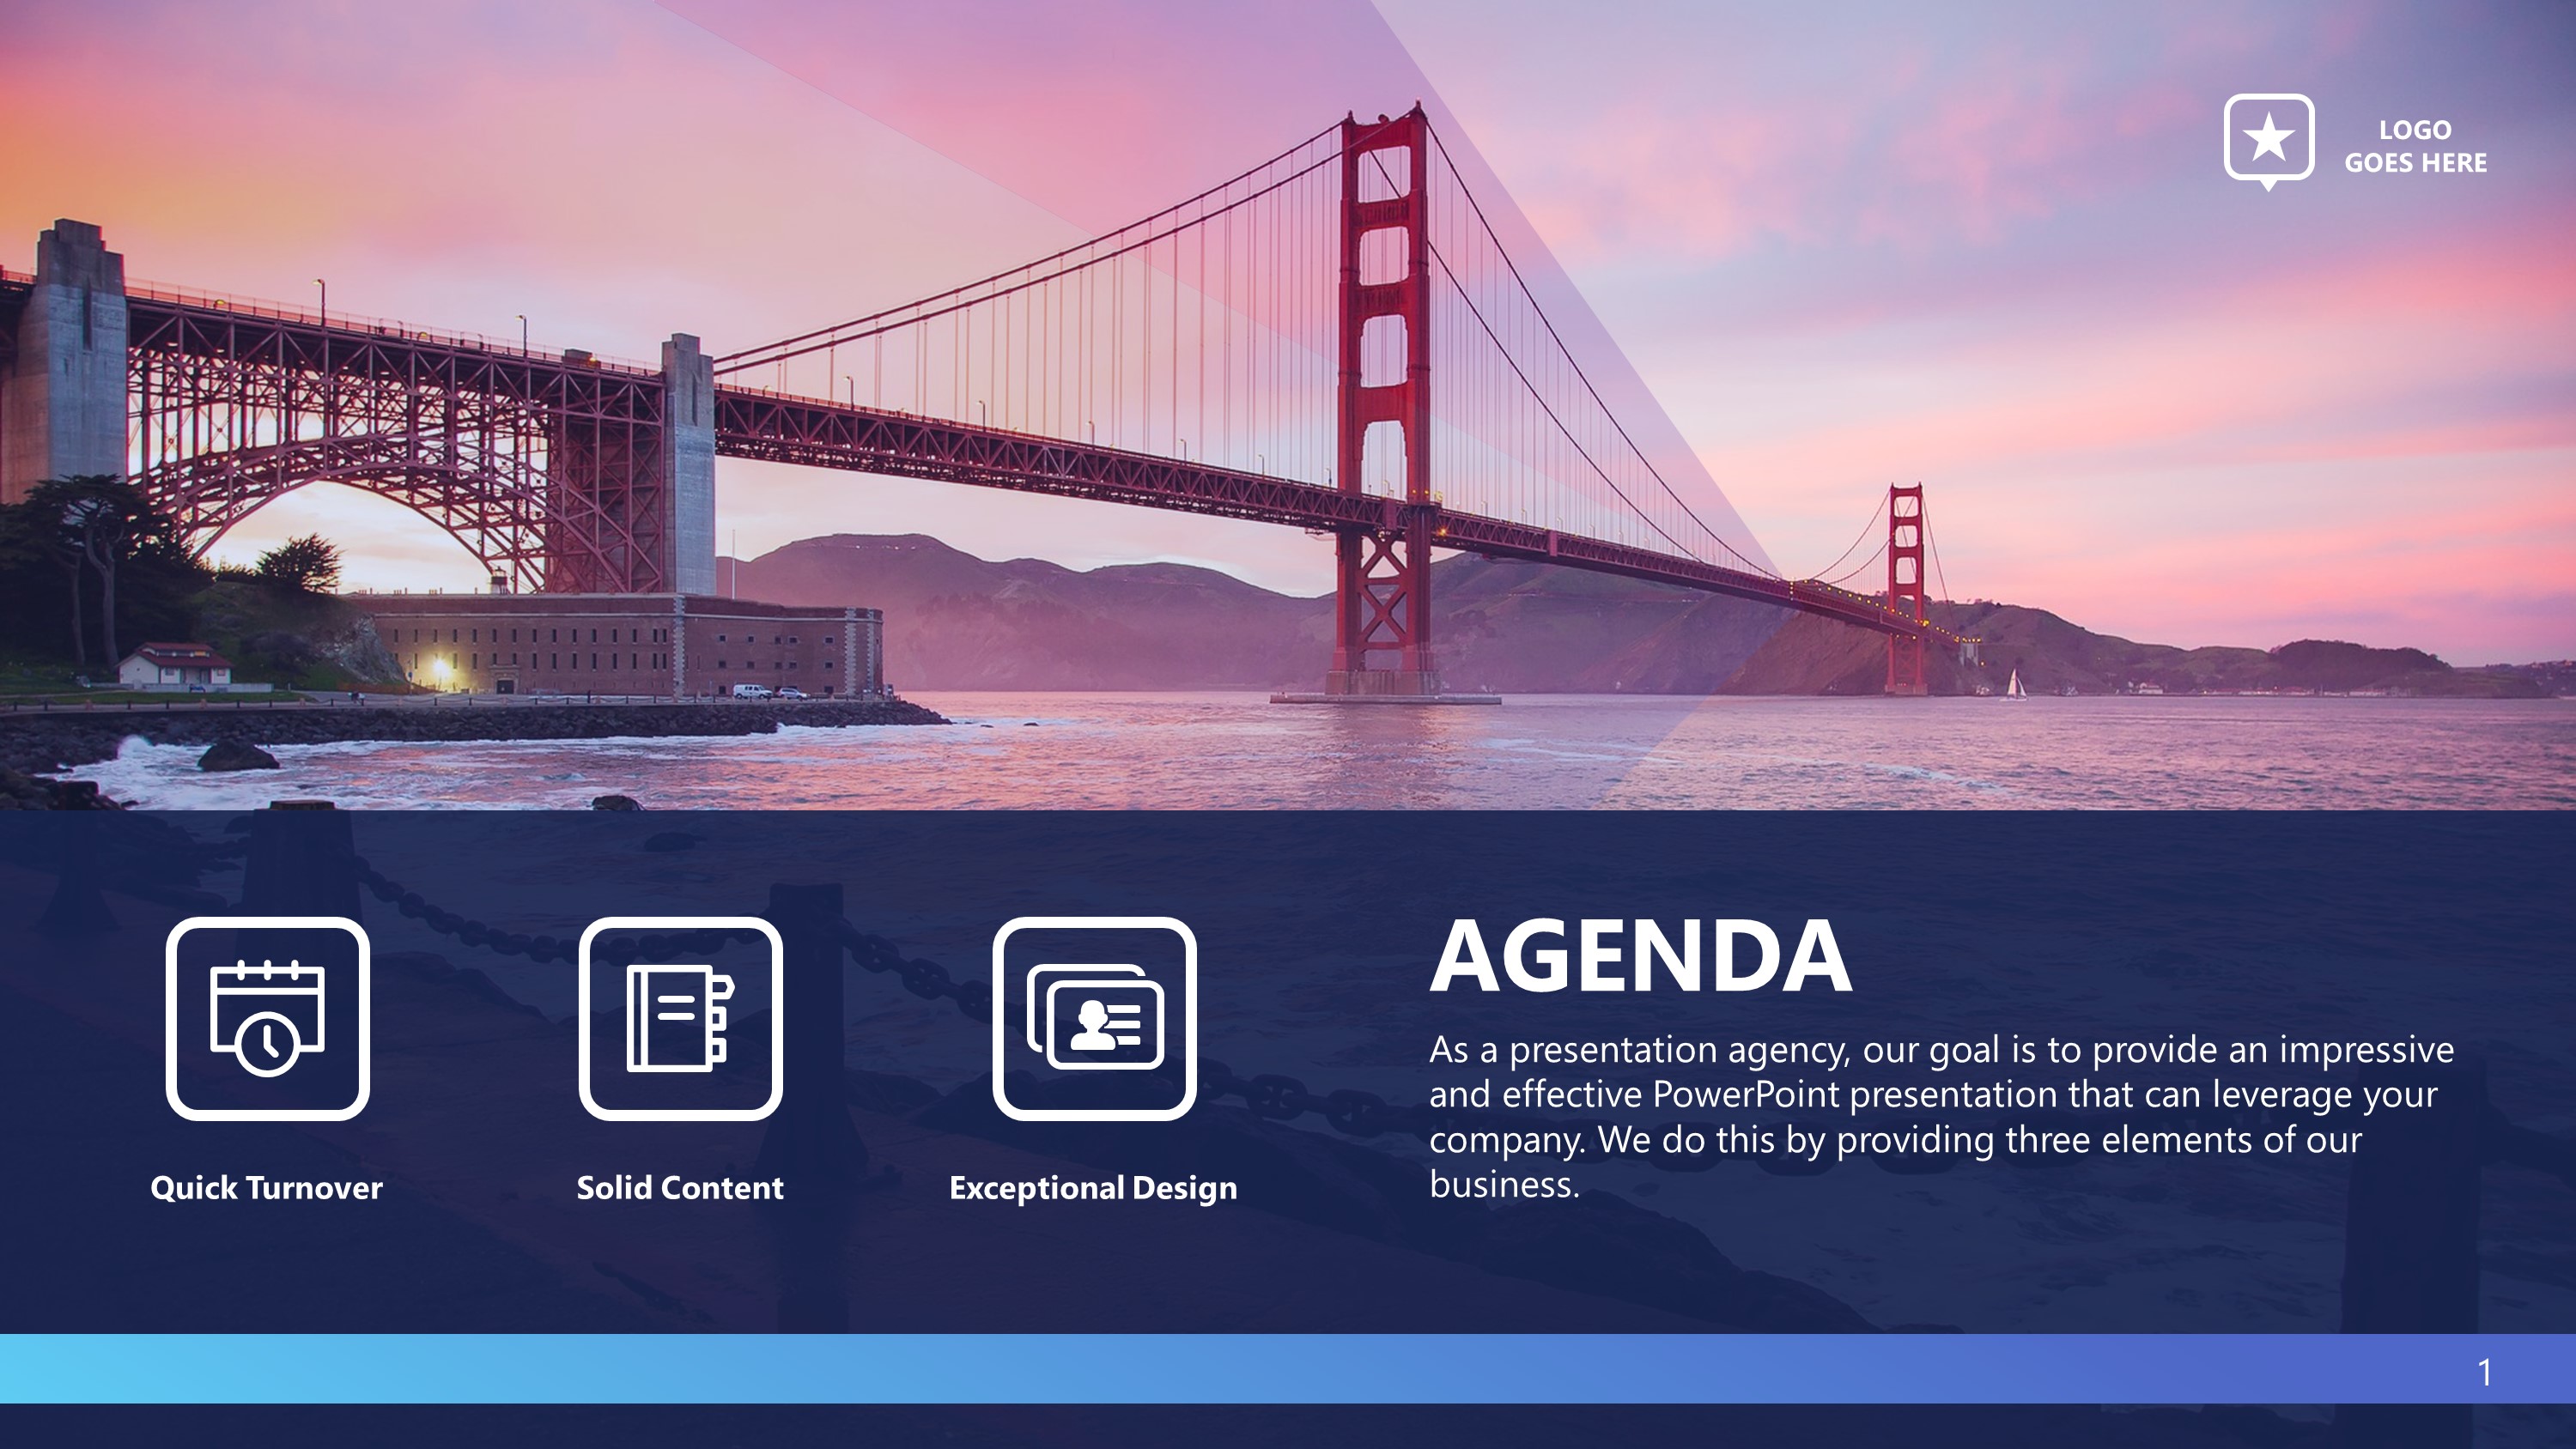 Corporate Travel Agenda Slides for PowerPoint